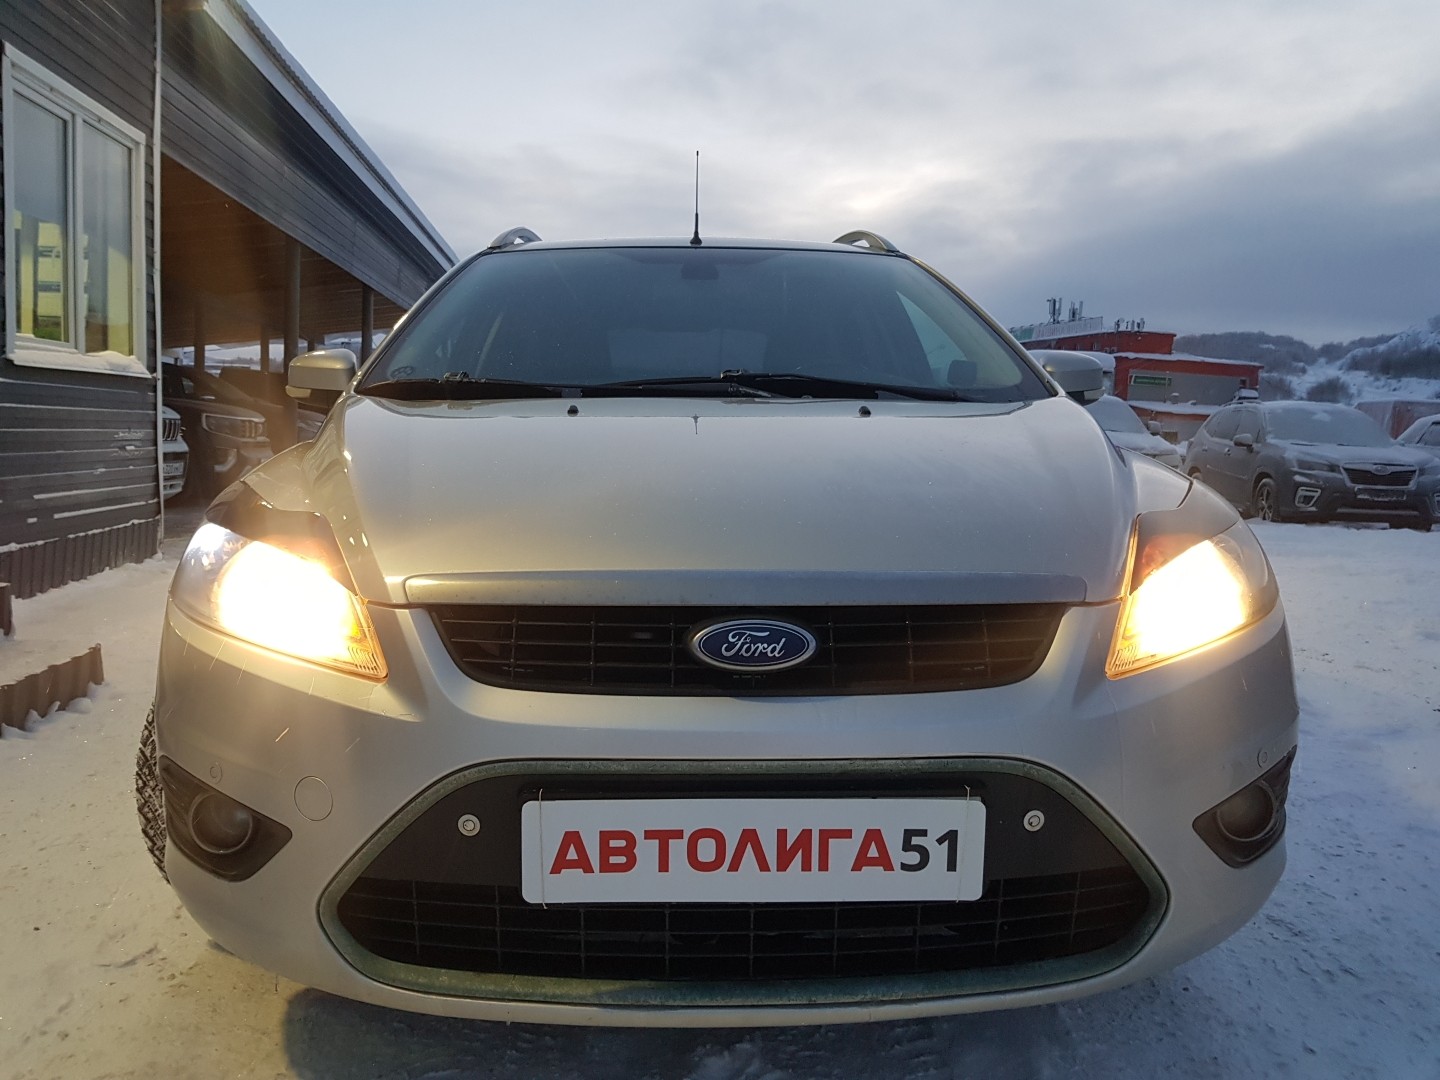 Ford Ford Focus, 2010 г.в., пробег 153 300 км, цена, фото, Мурманск